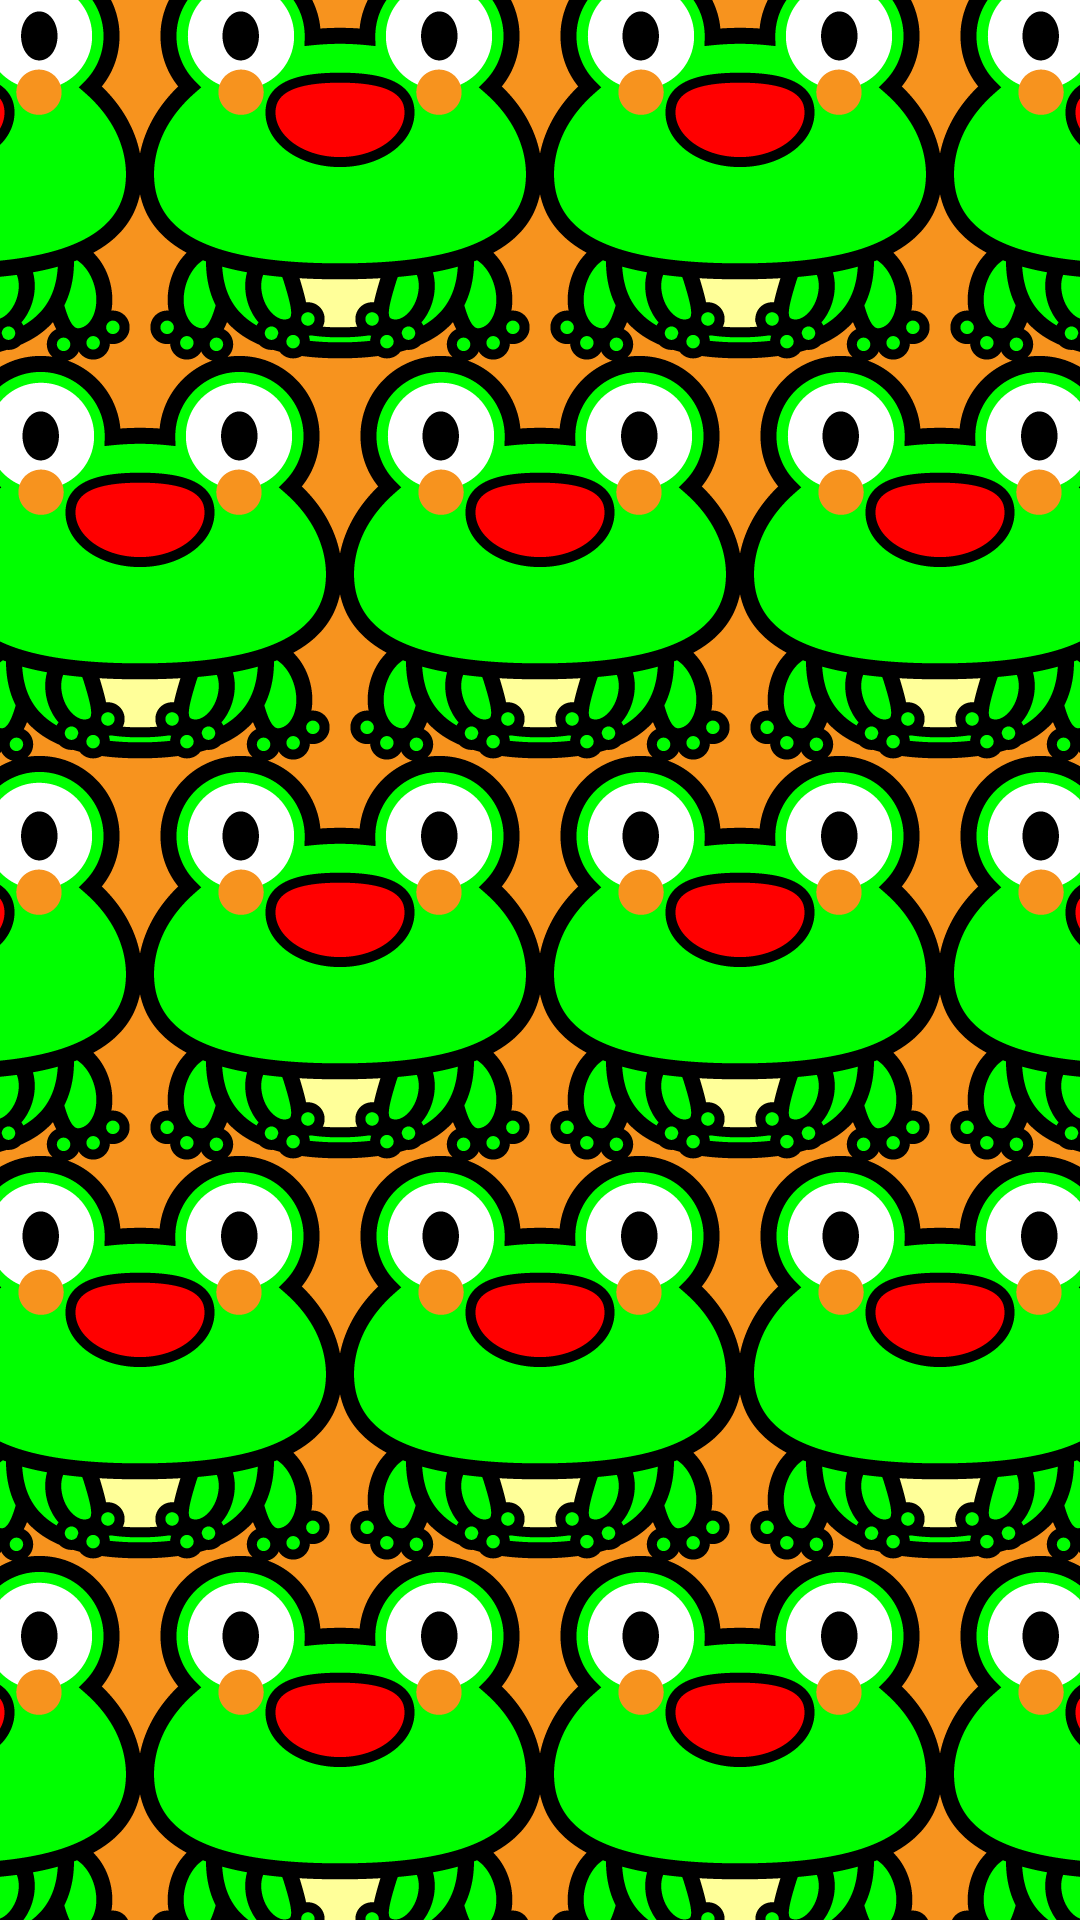 wallpaper1_sitfrog-fiill-orange-iphone